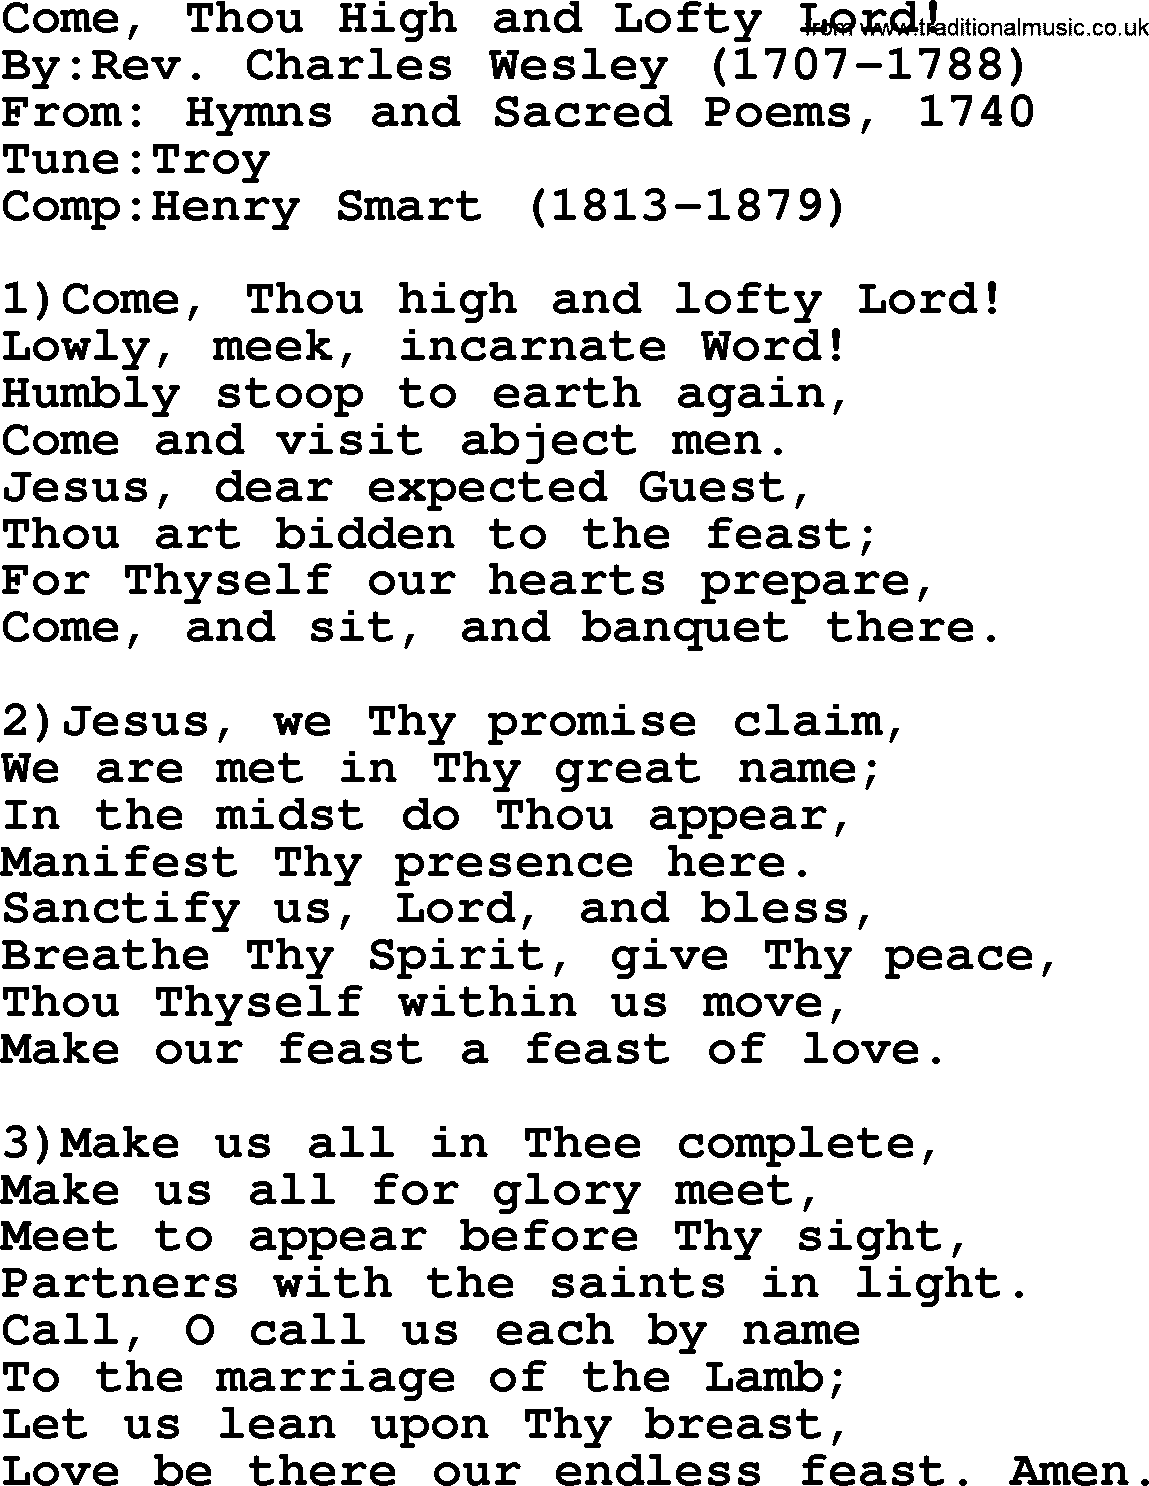 Methodist Hymn: Come, Thou High And Lofty Lord!, lyrics